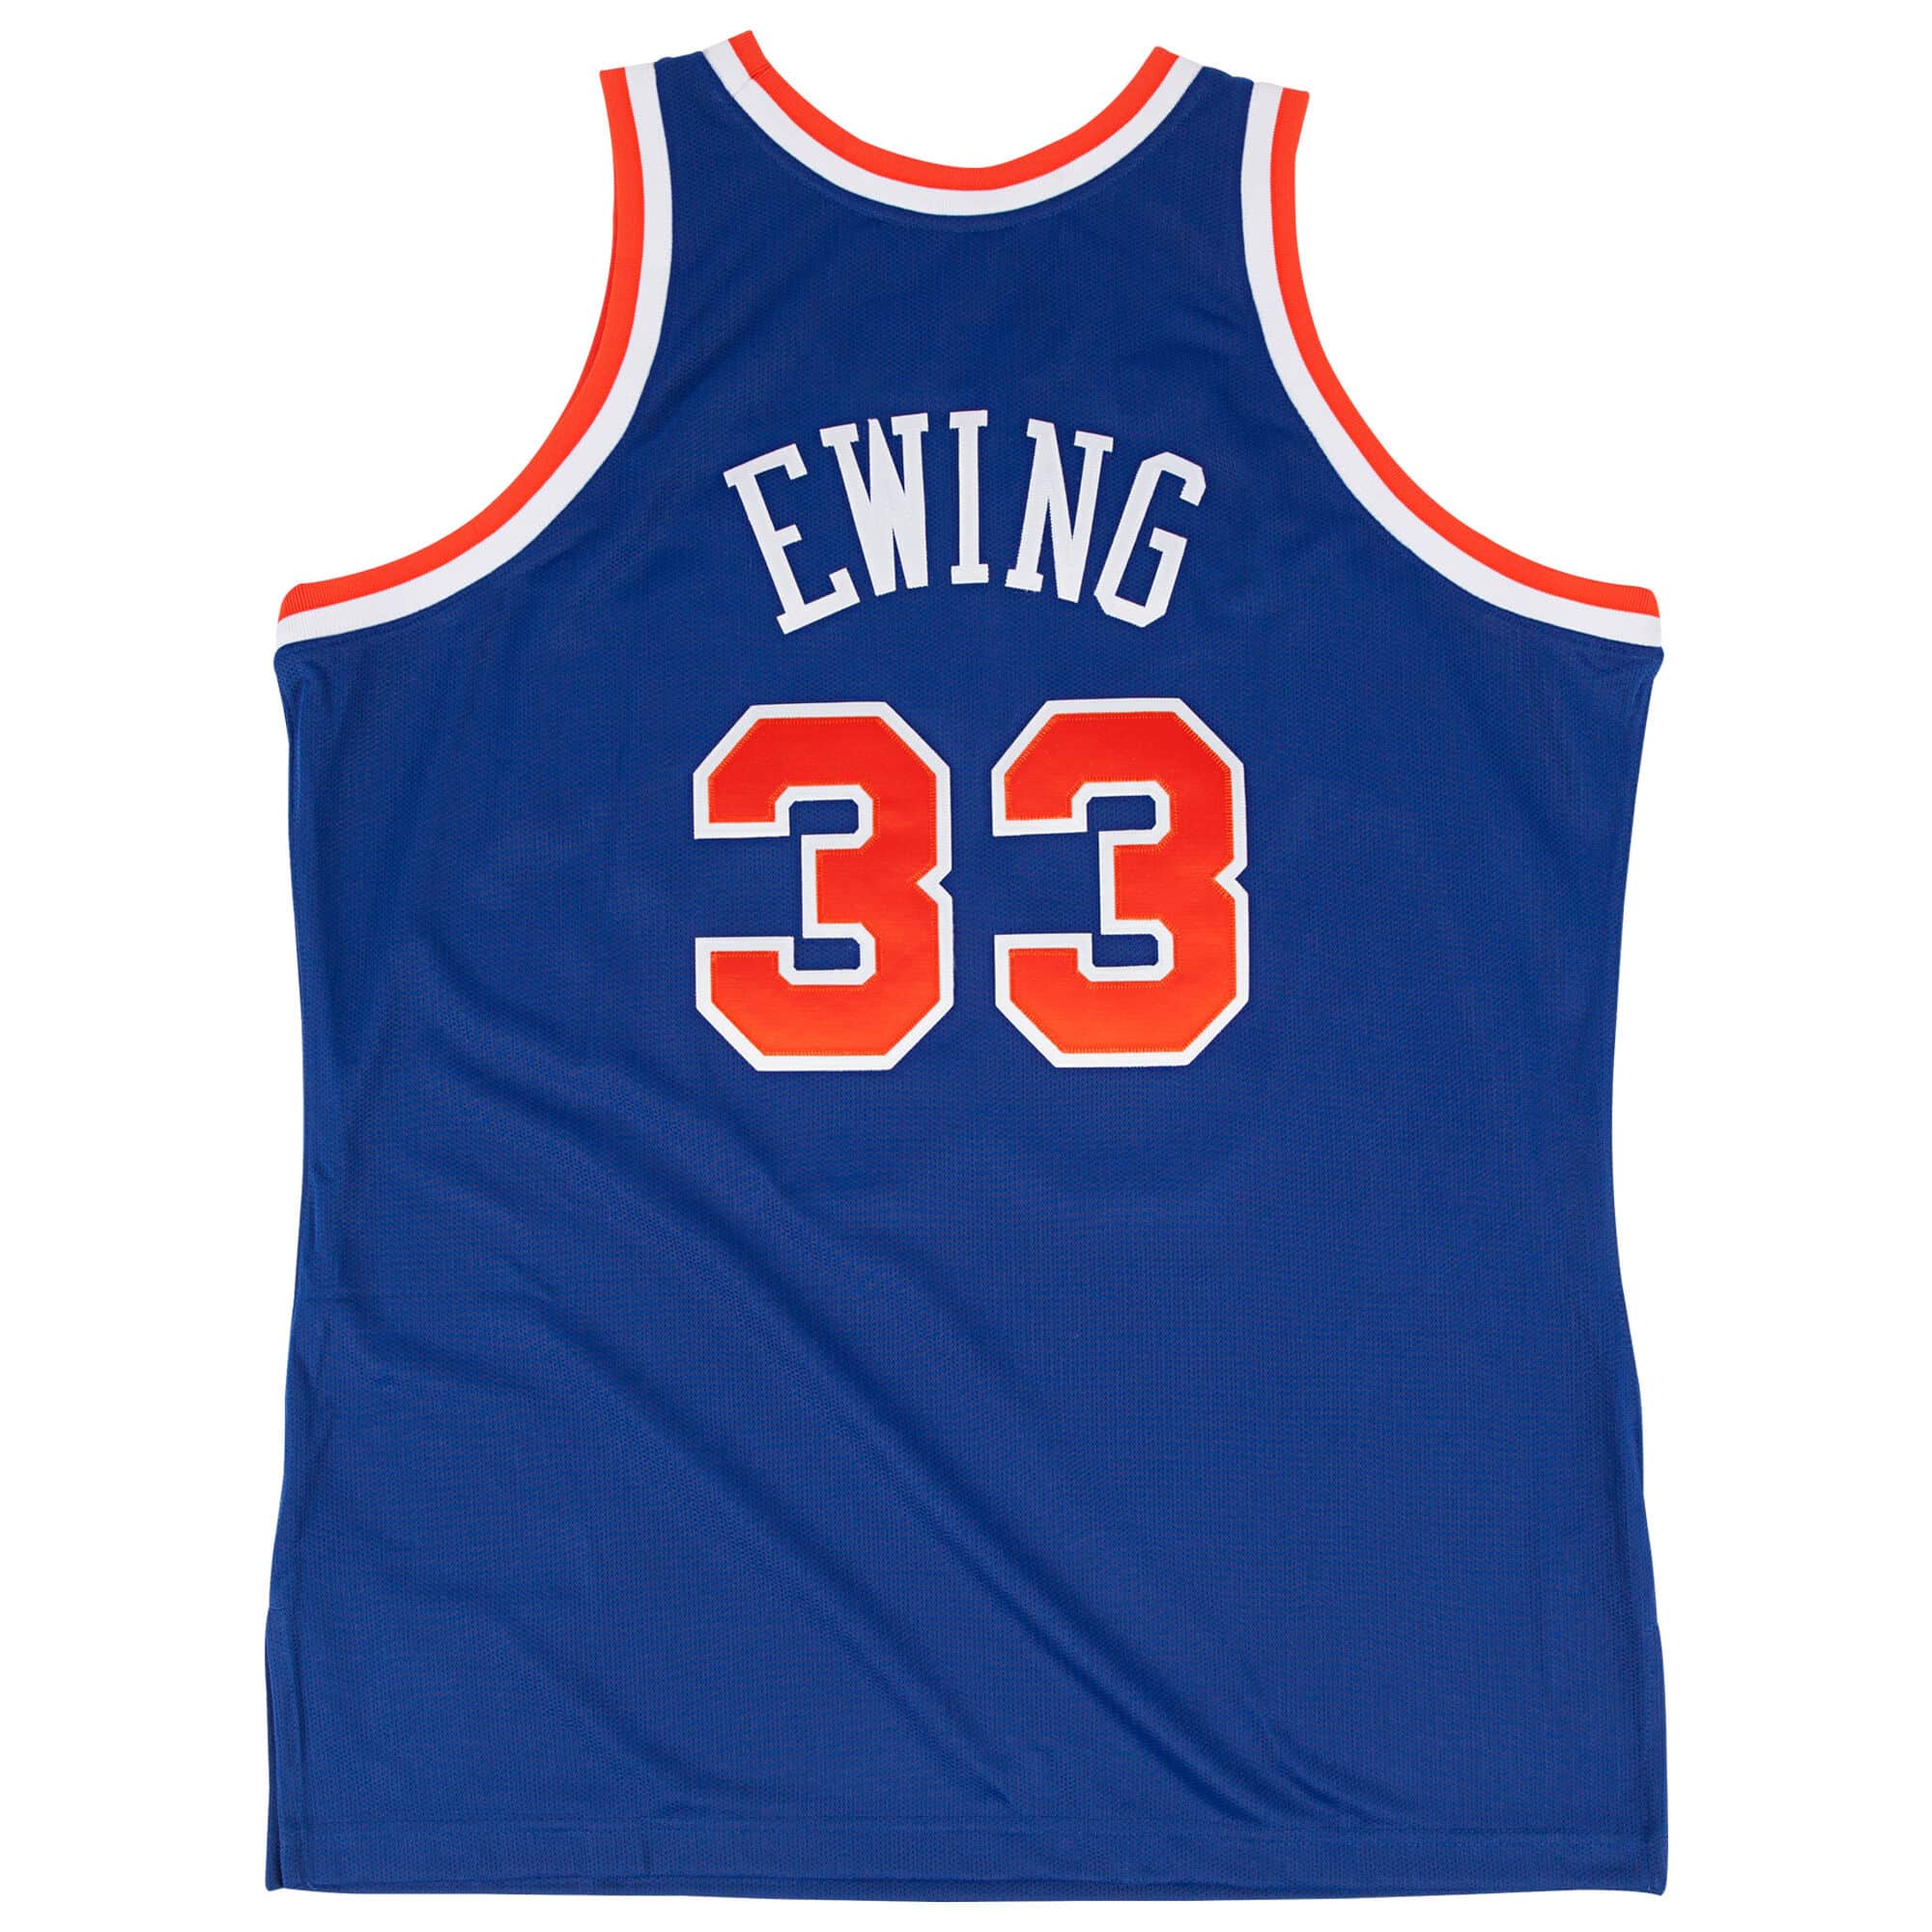 Patrick Ewing 1991-92 Authentic Jersey New York Knicks